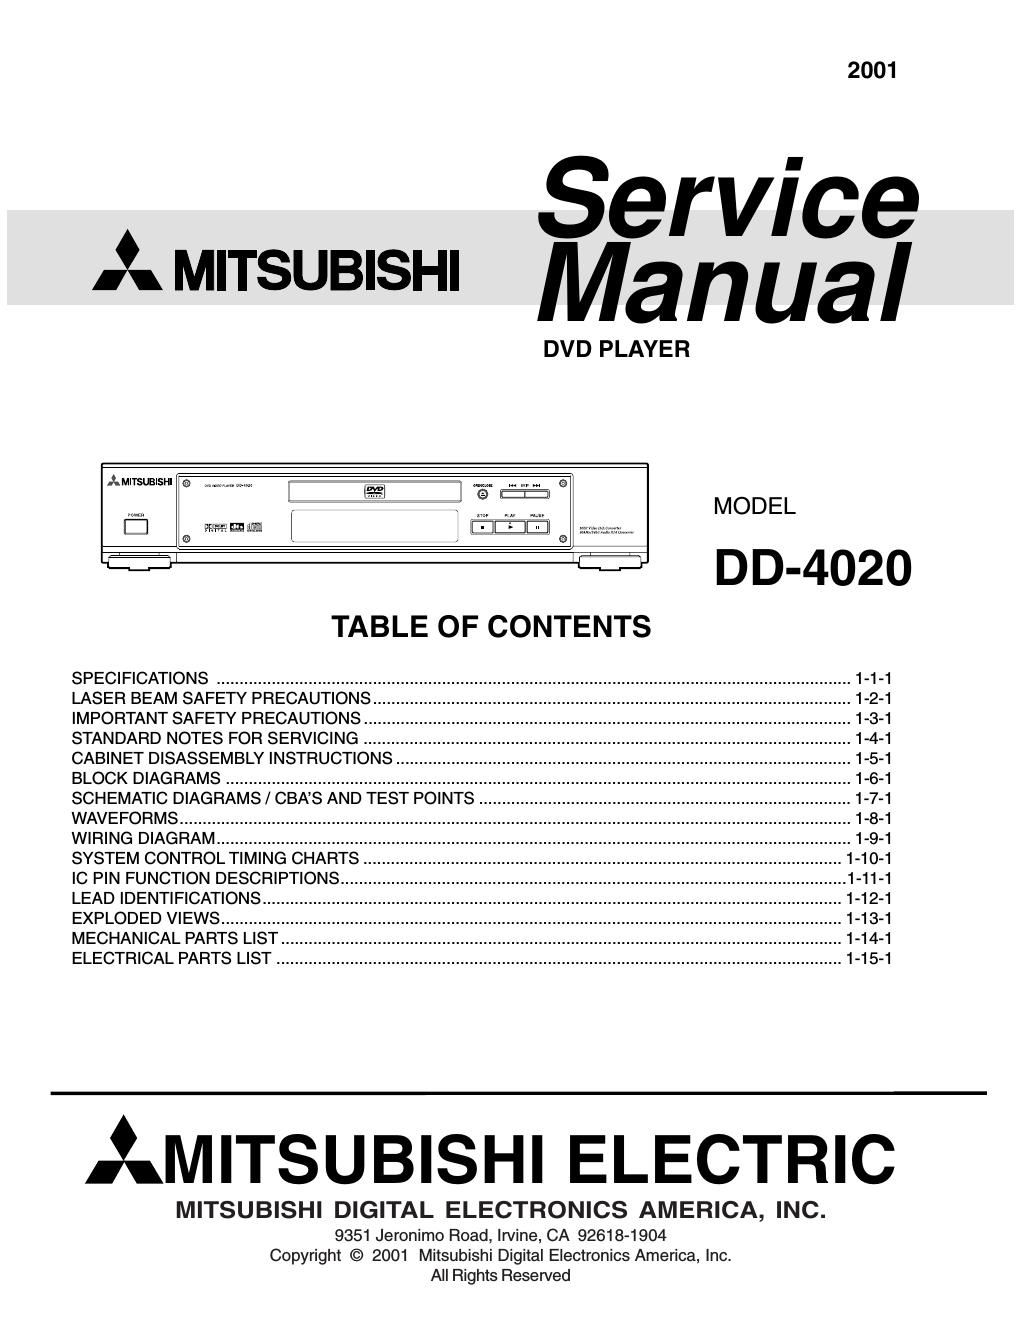 mitsubishi dd 4010 service manual